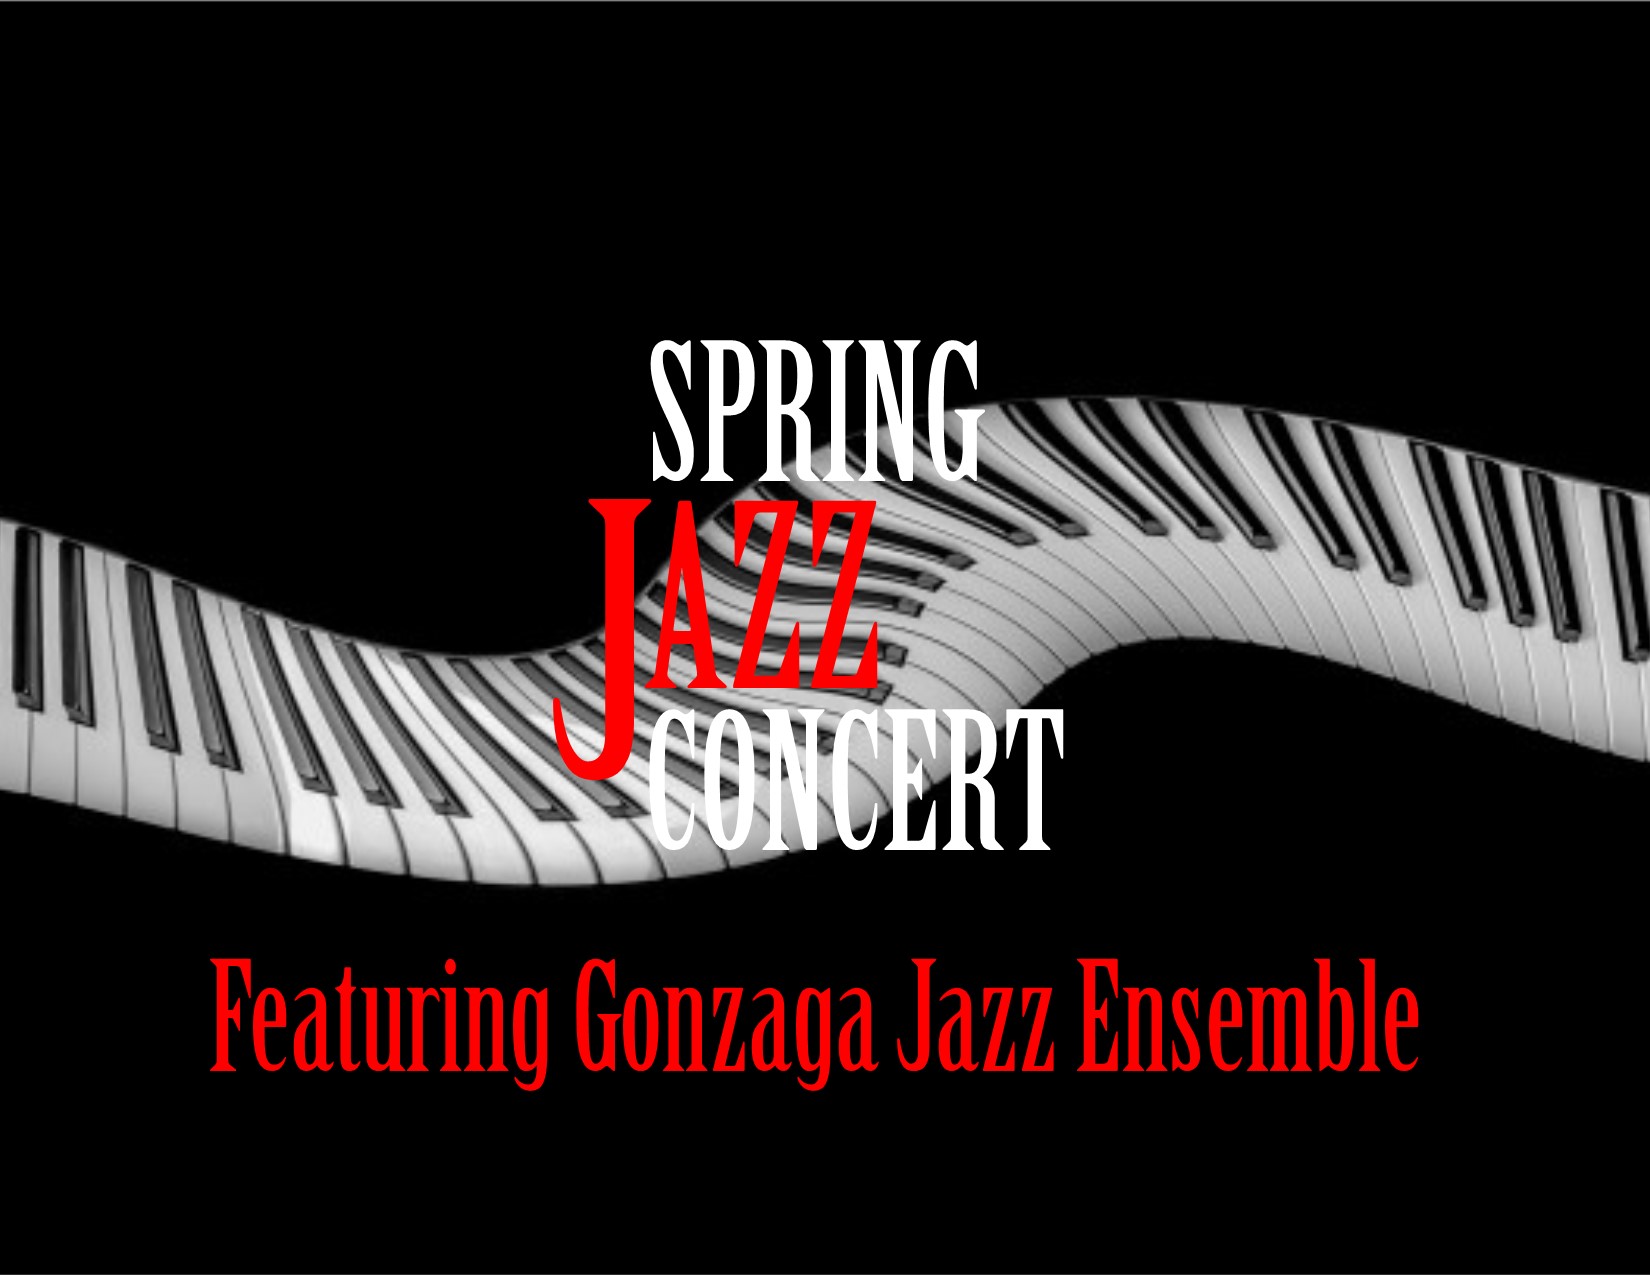 Spring Jazz Concert Featuring the Gonzaga Jazz Ensemble